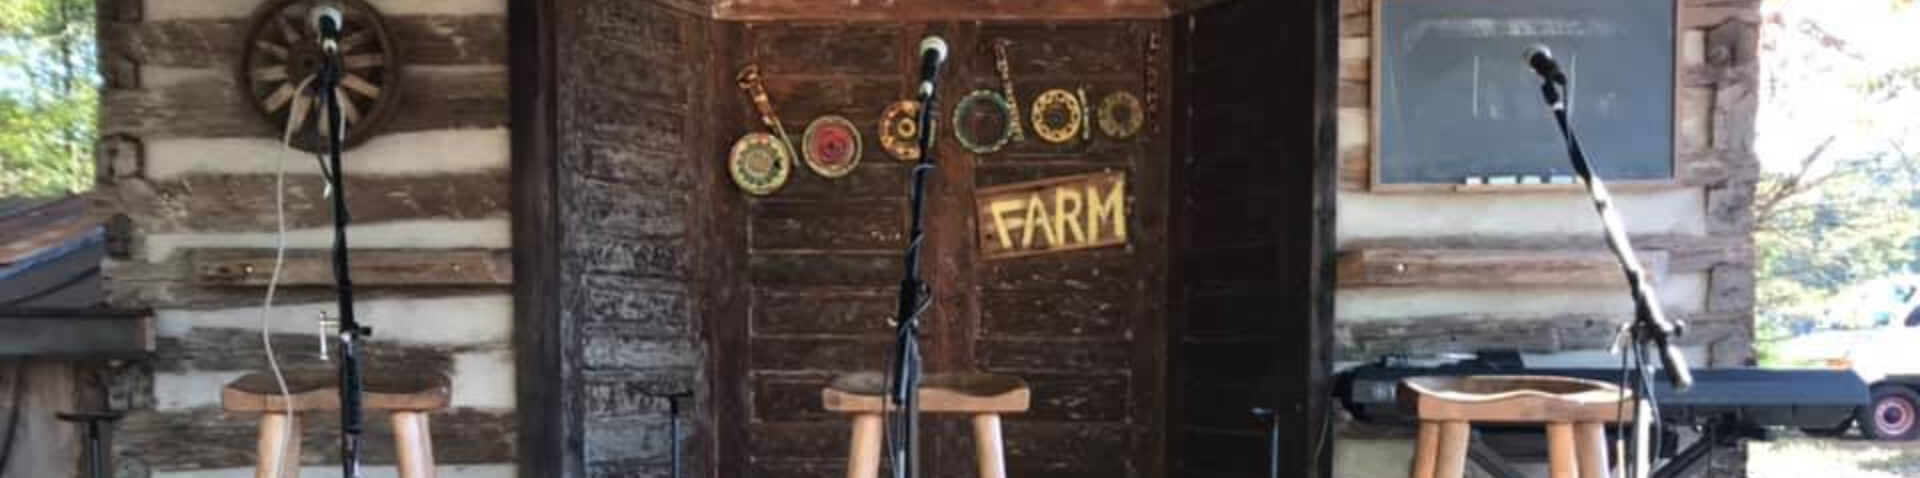 stage built on a farm shack